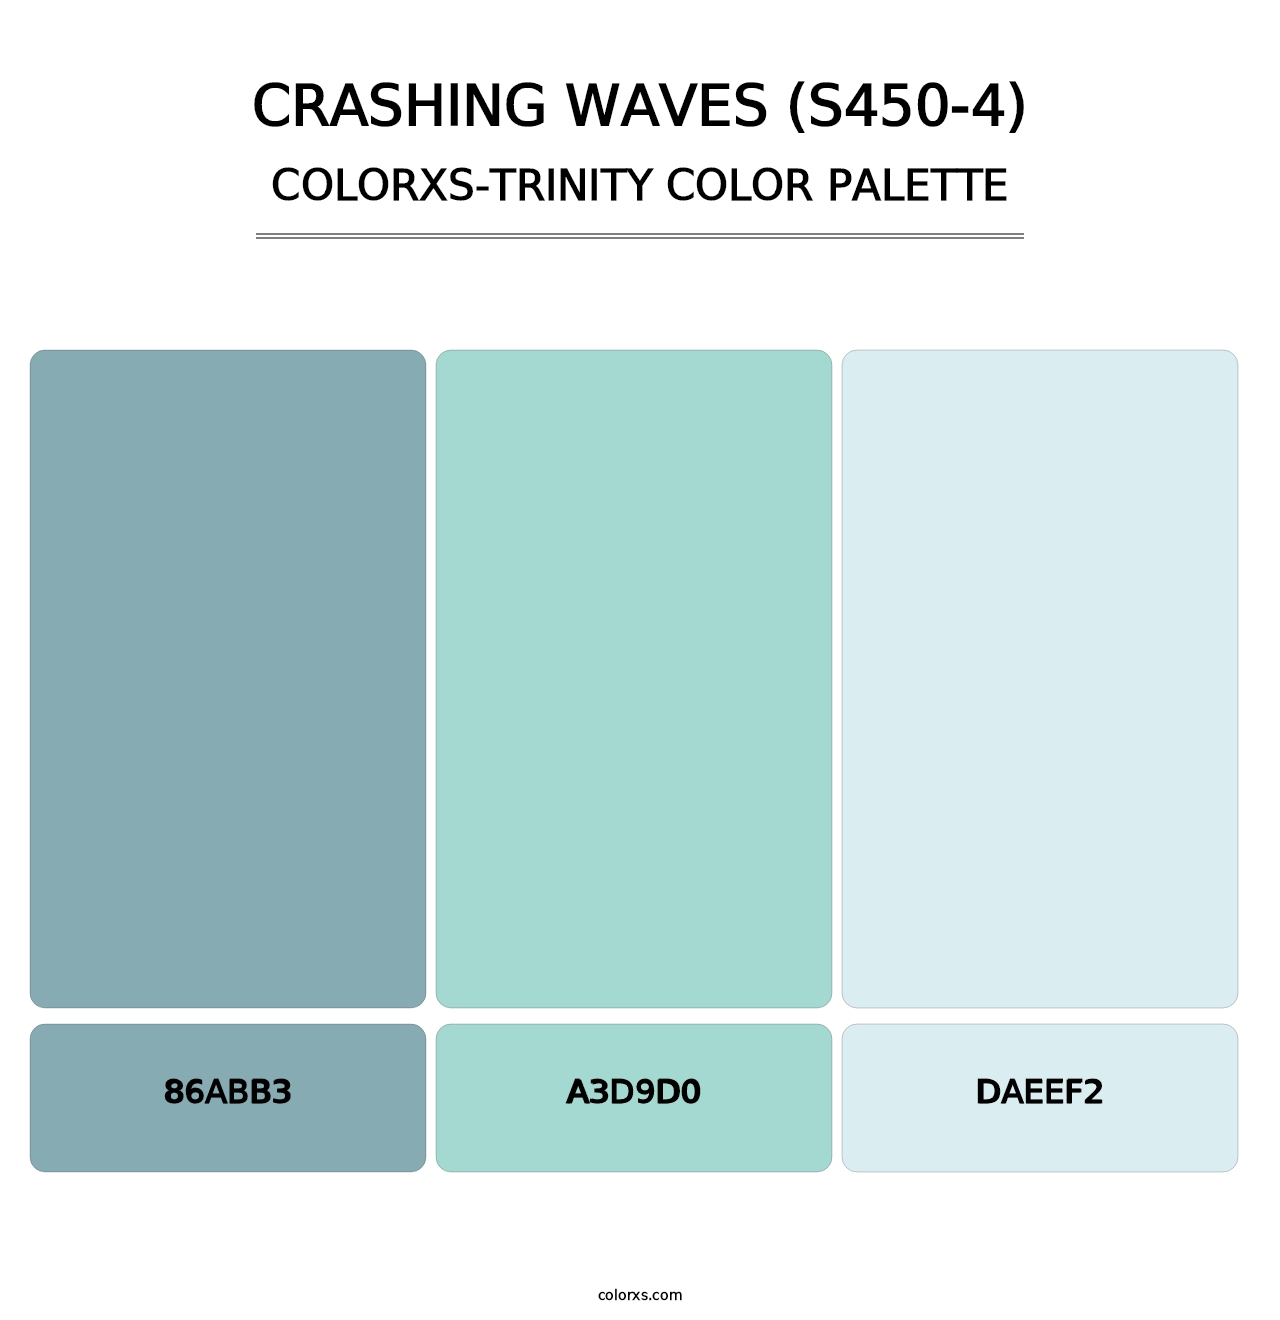 Crashing Waves (S450-4) - Colorxs Trinity Palette